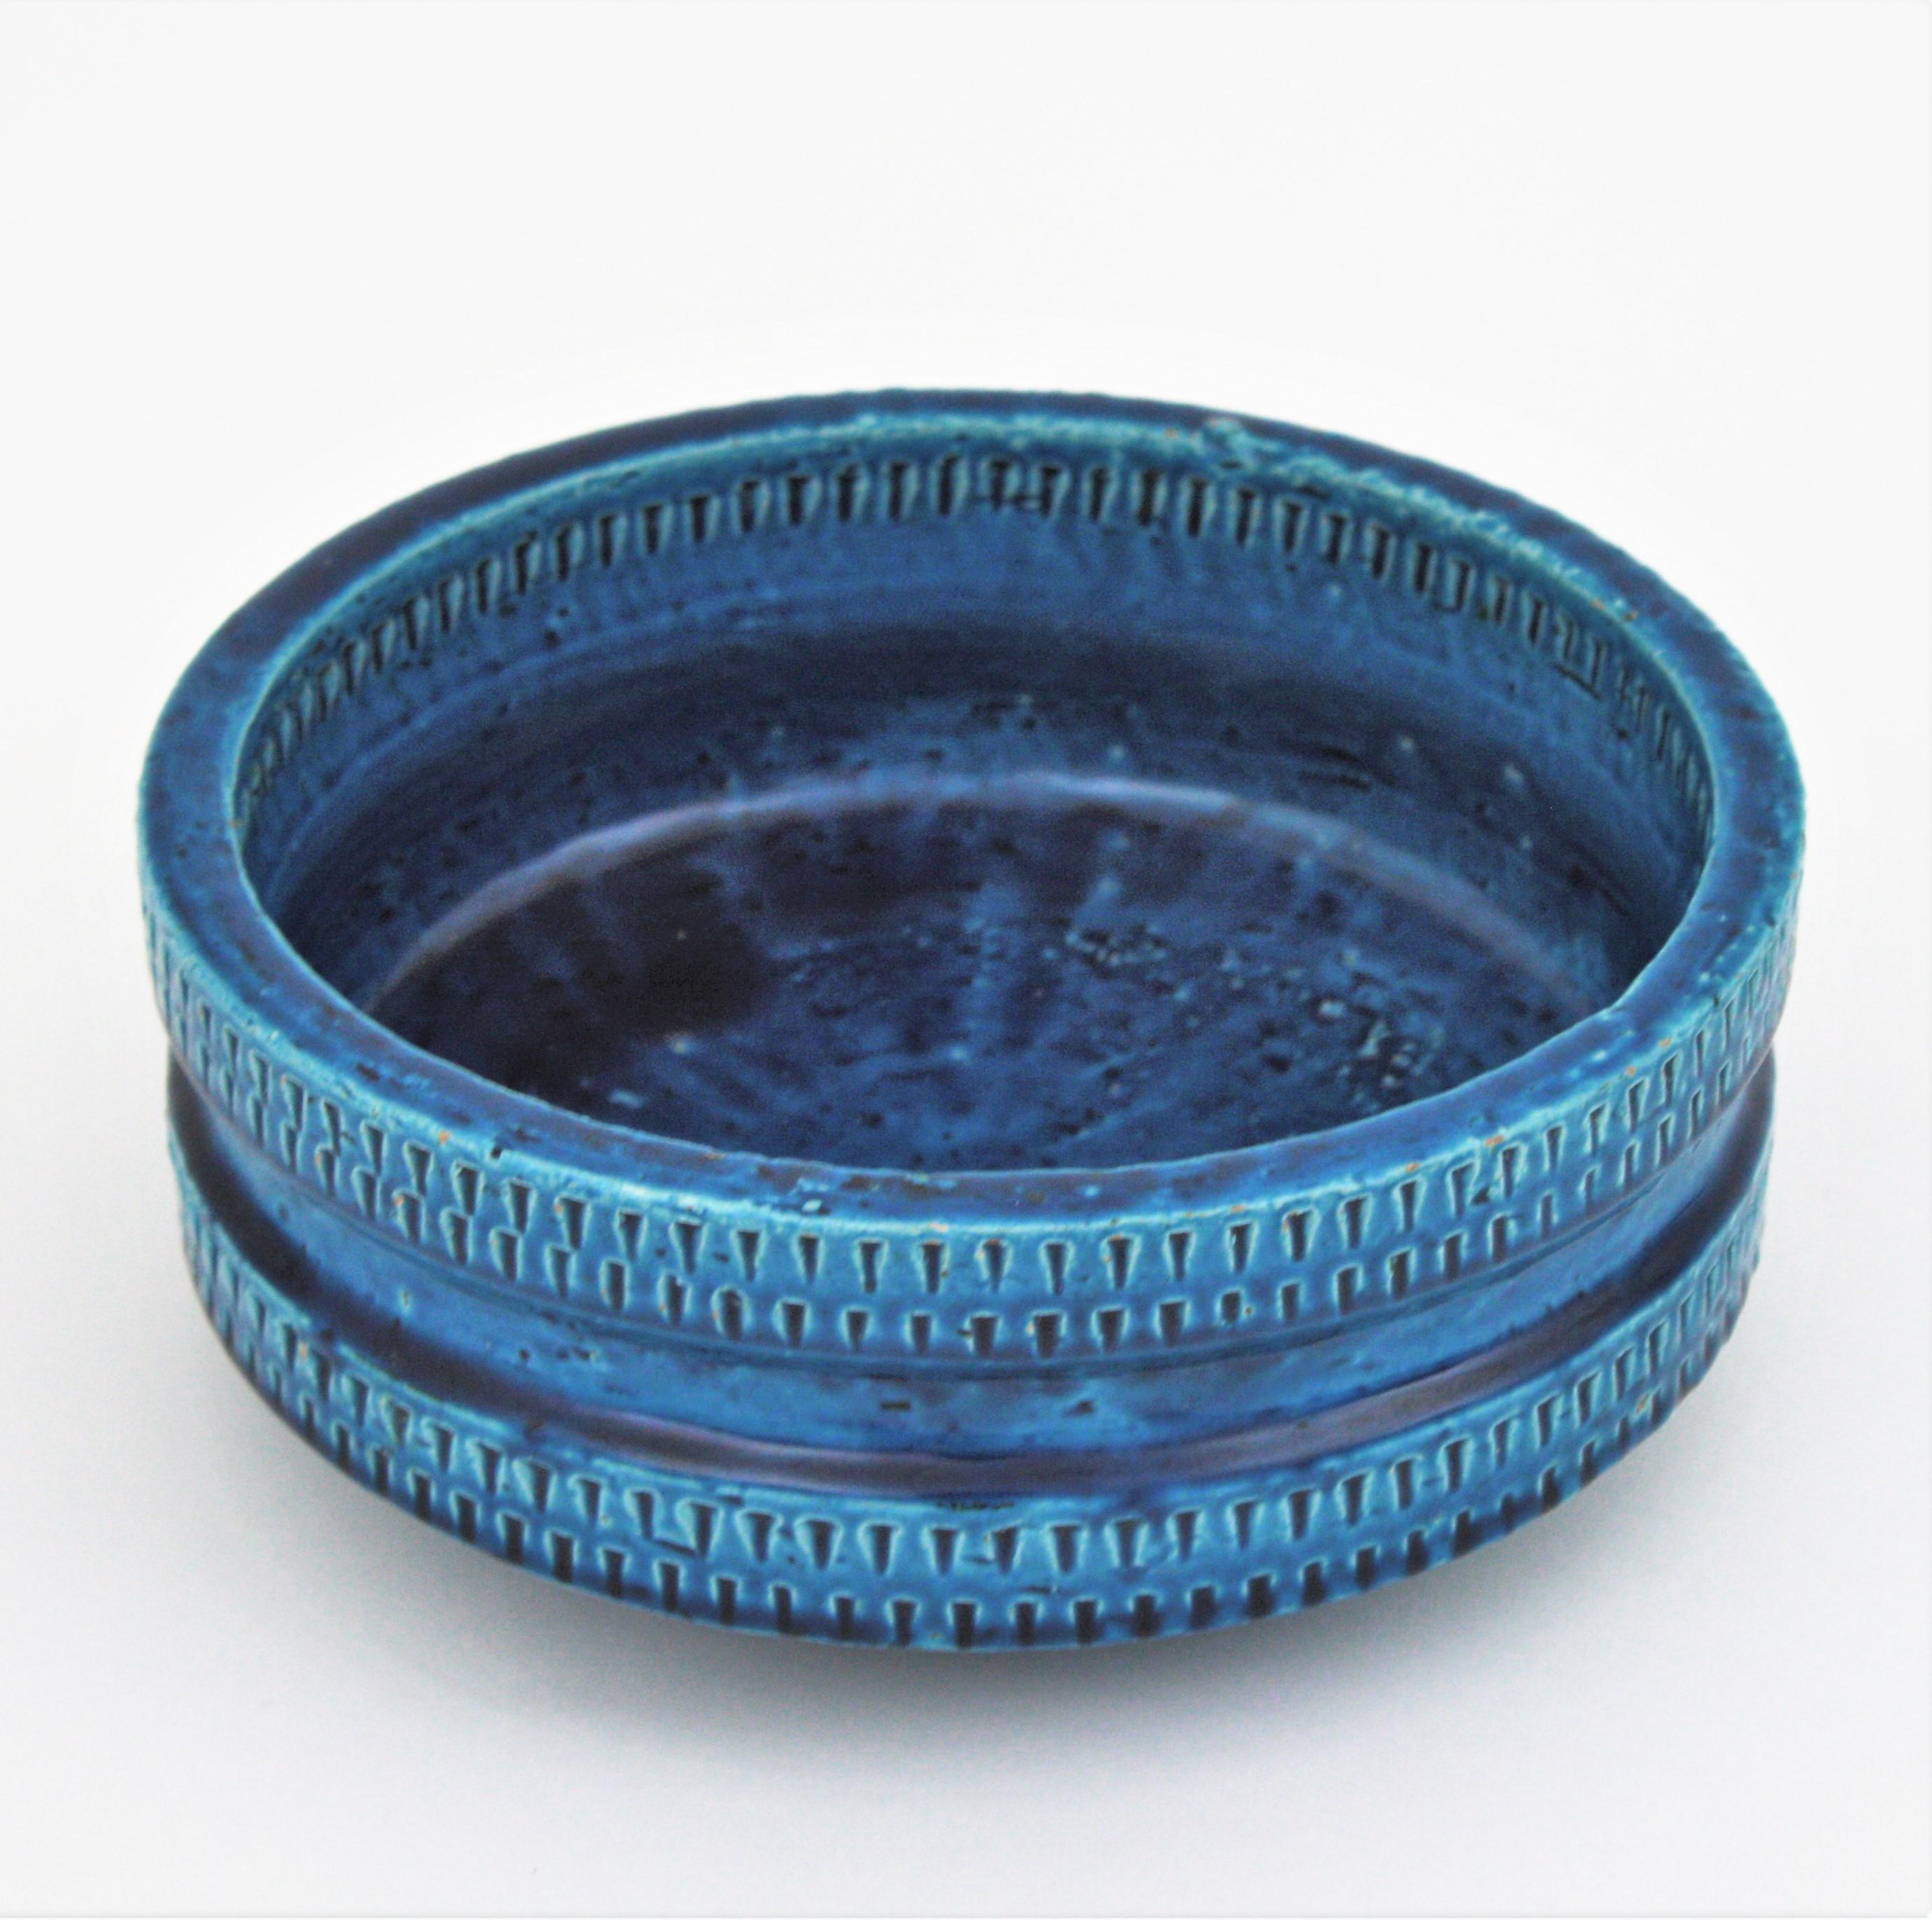 SIC Rimini Blue Glazed Ceramic Large Centerpiece Bowl, Bitossi Aldo Londi Style 2